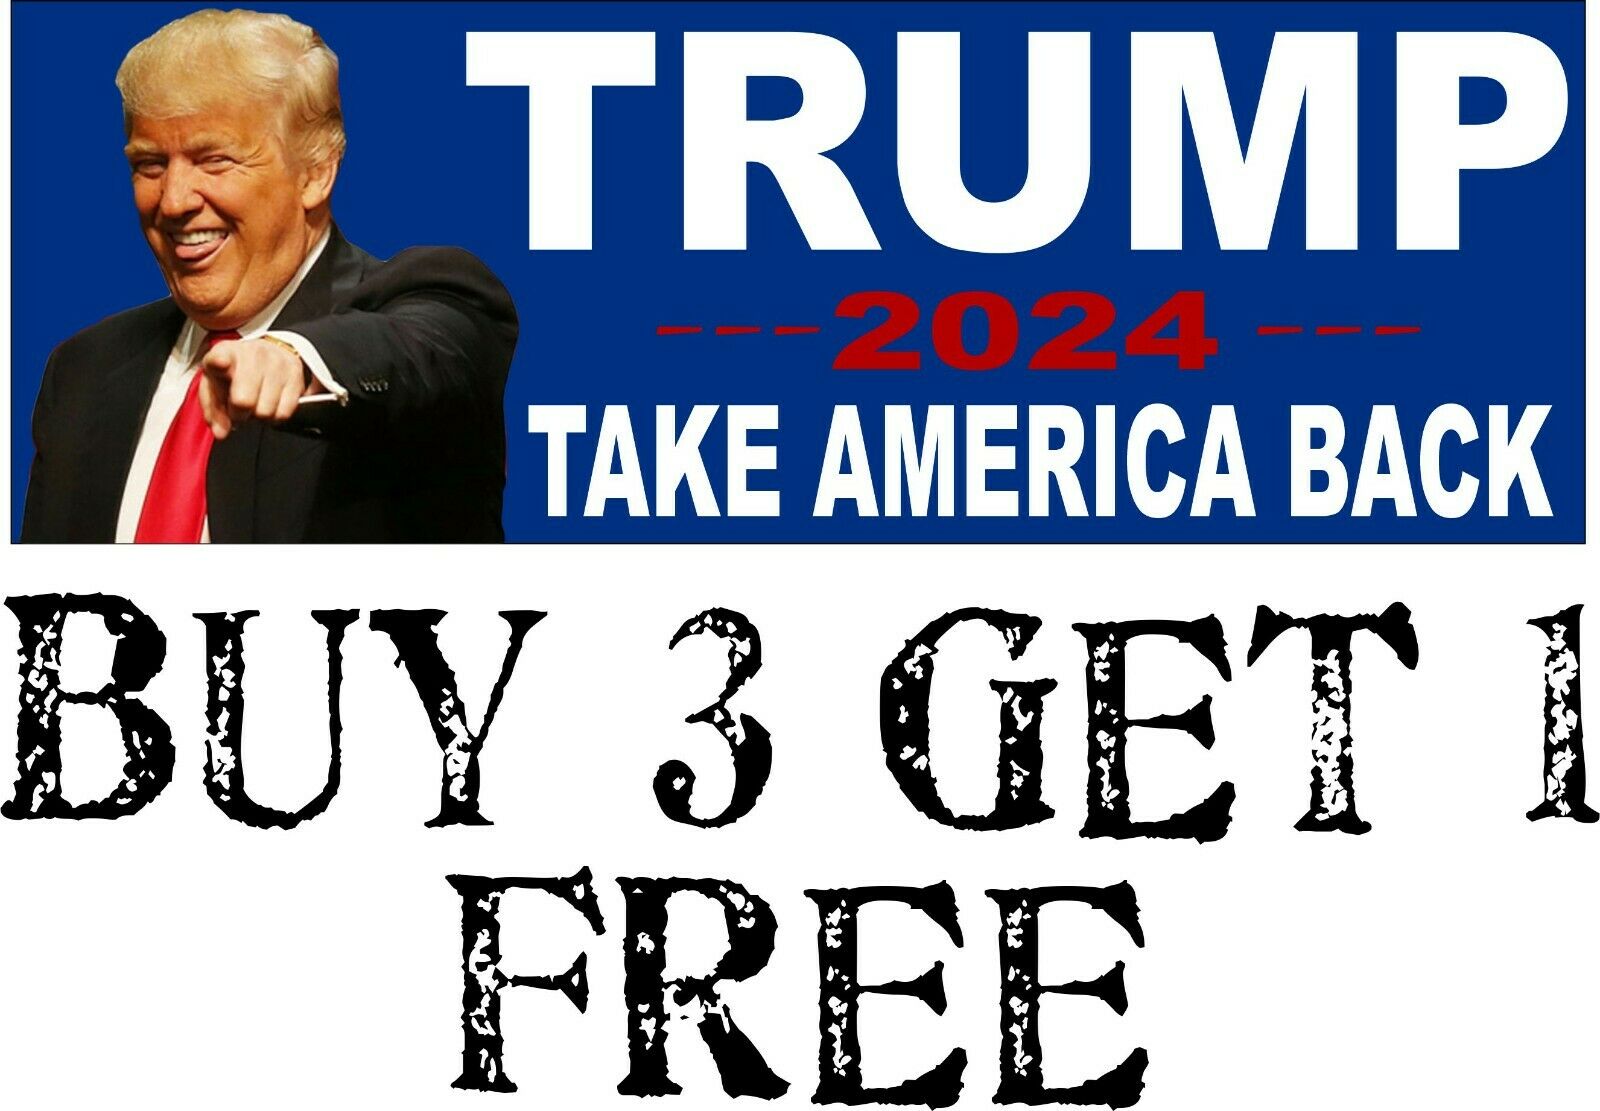 Trump President Take America Back Maga 2024 Bumper Sticker 87 X 3 Trump 2024 Powercall